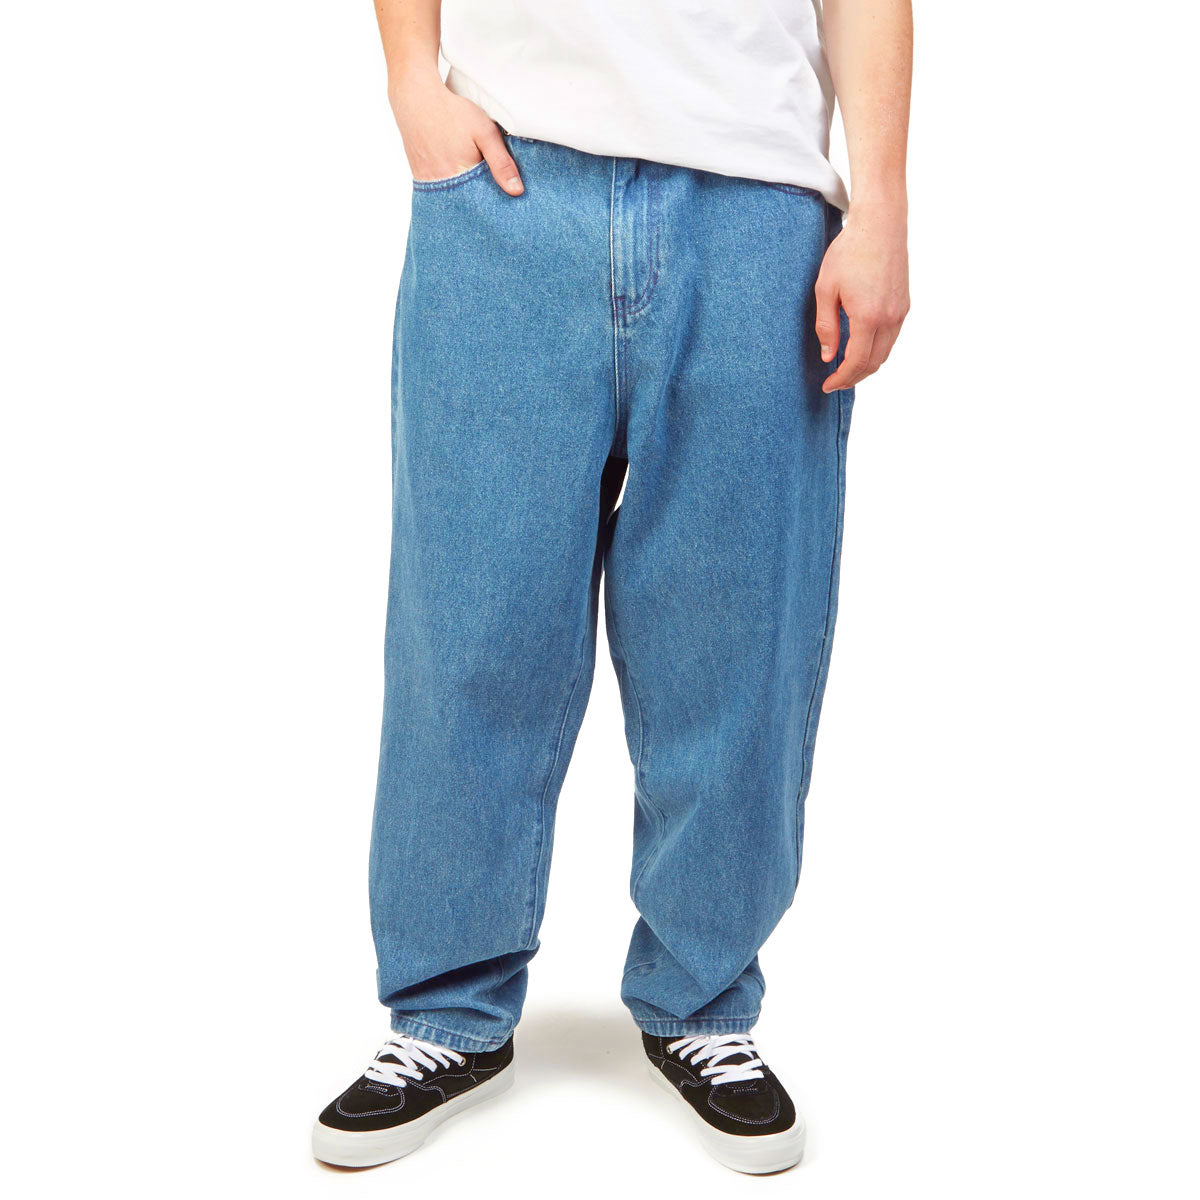 CCS Baggy Taper Denim Jeans - Medium Wash image 1